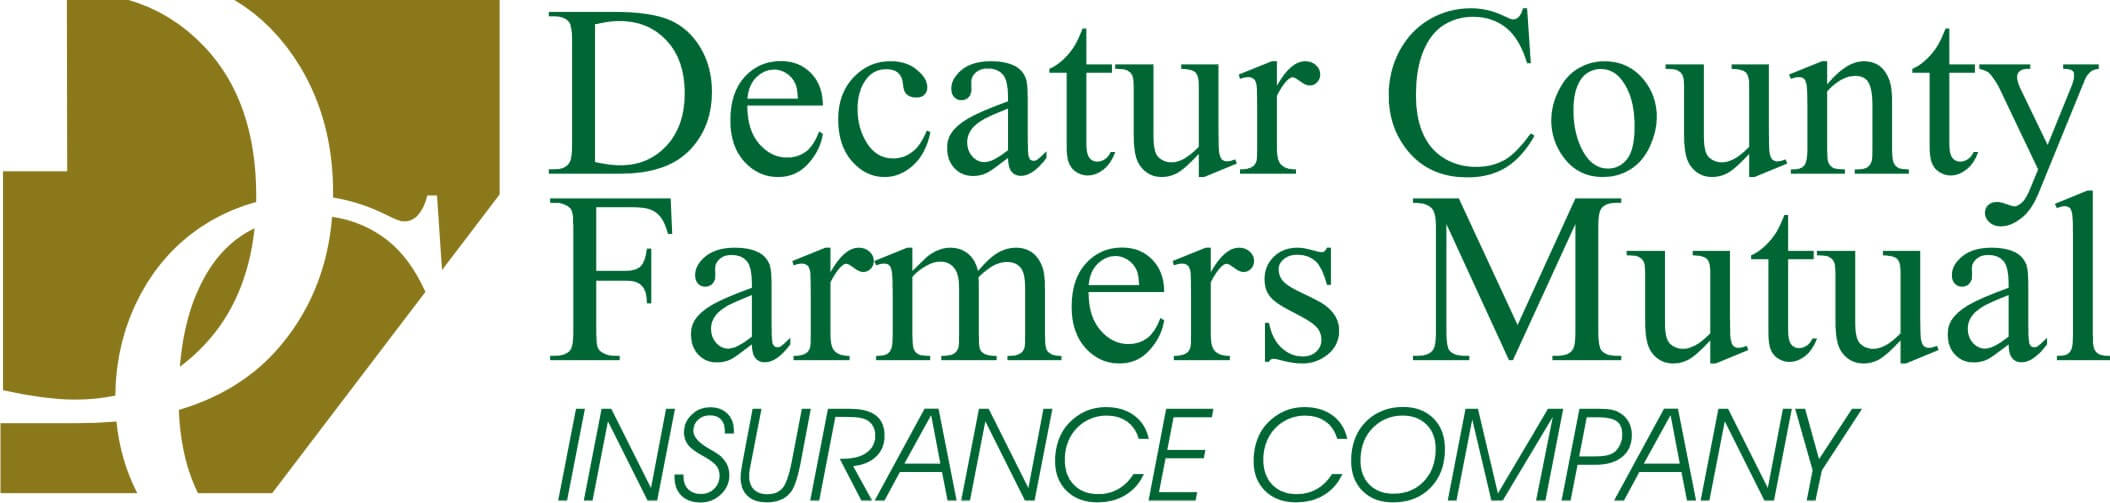 Decatur County Farmers Mutual Insurance Company Logo